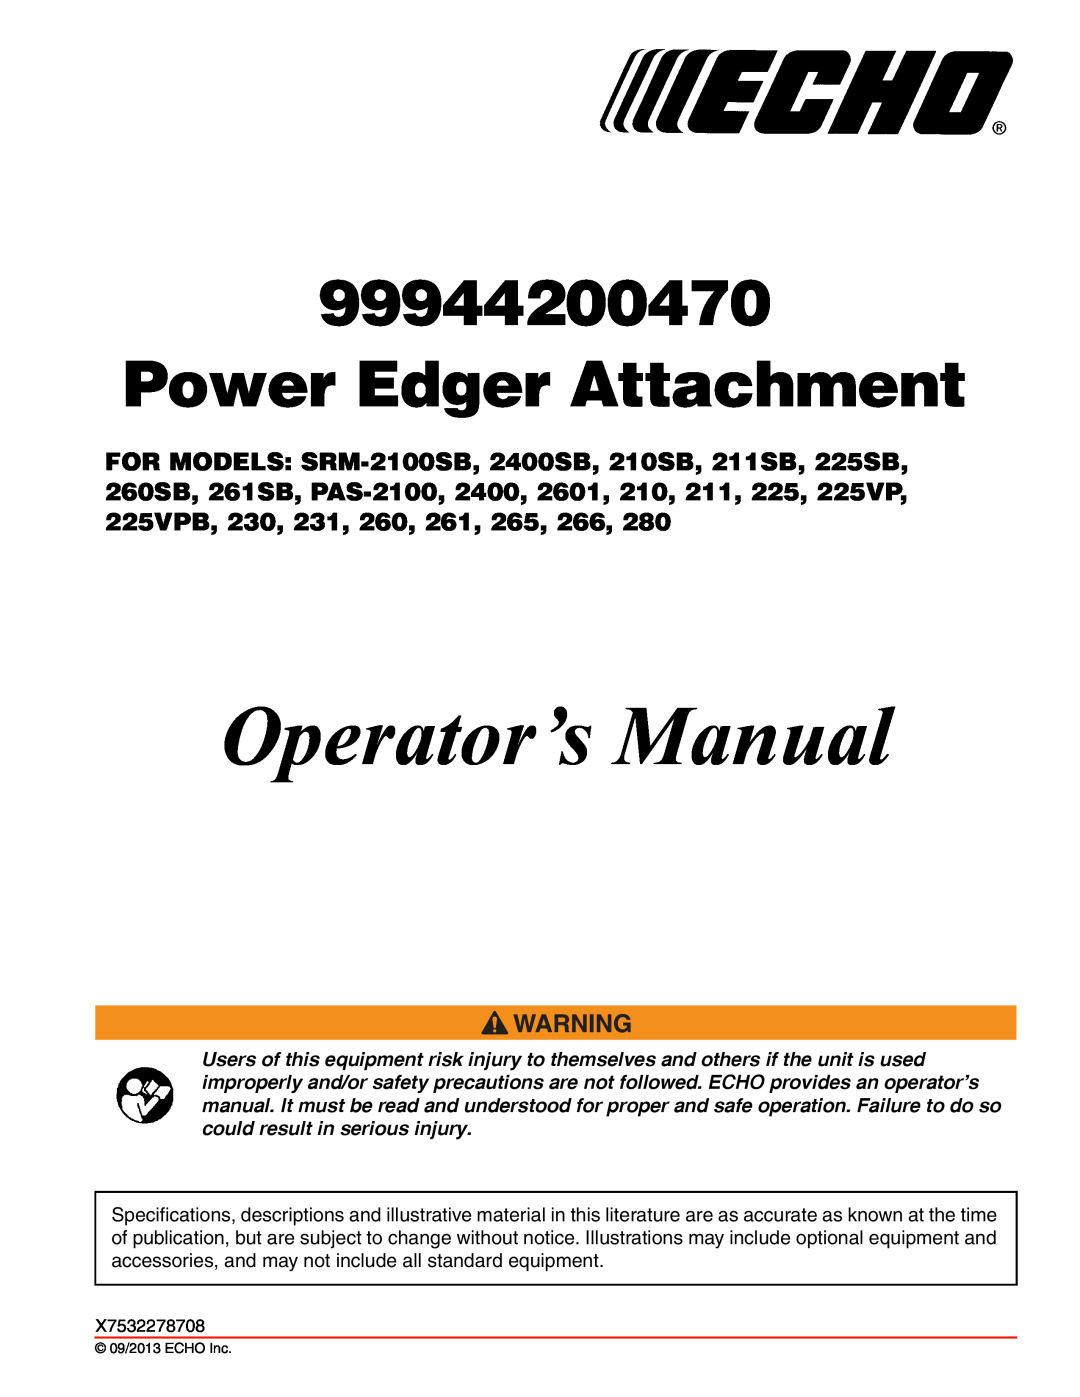 Echo 99944200470 manual Warning Danger, Power Edger Attachment, Operator S Manual, X7532278700, X753001210 08/02, Model 